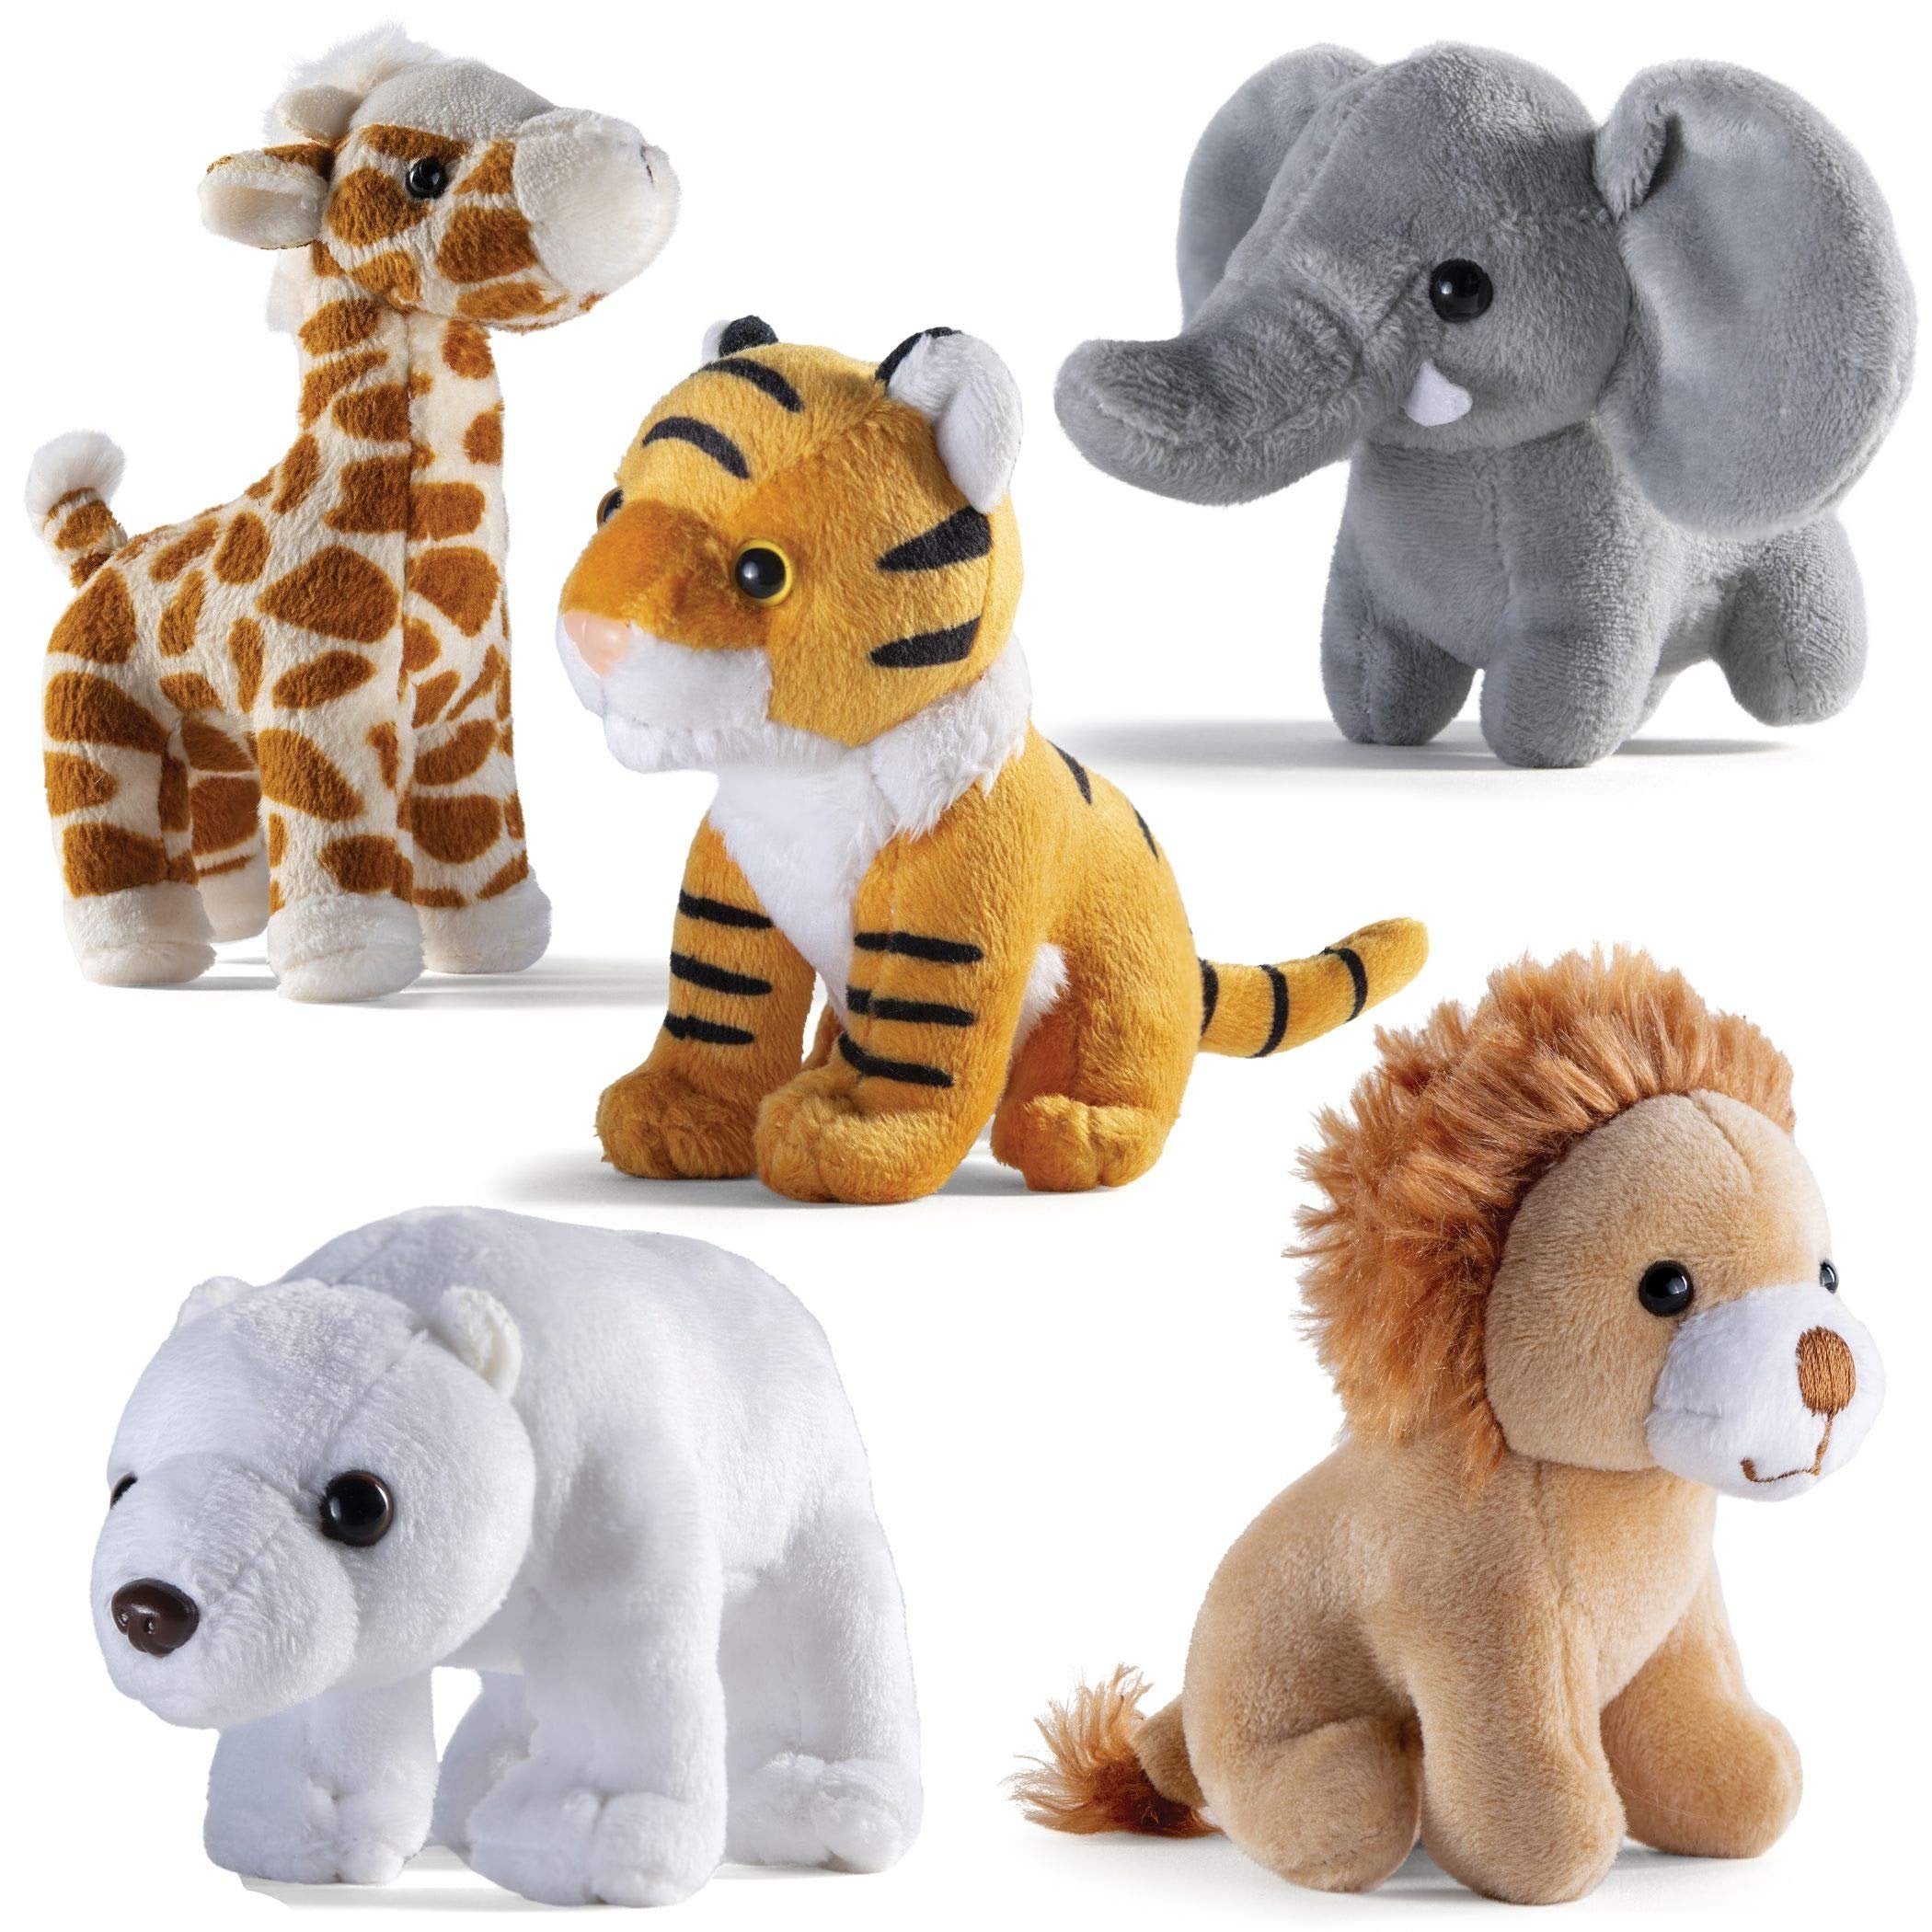 PREXTEX Safari Friends Stuffed Animal Gift Set - 5 Small Plush Stuffed Animals (Giraffe, Tiger, Lion, Polar Bear, Elephant) Zoo Animals - Machine Washable Stuffed Animals for Boys & Girls Ages 3-5+